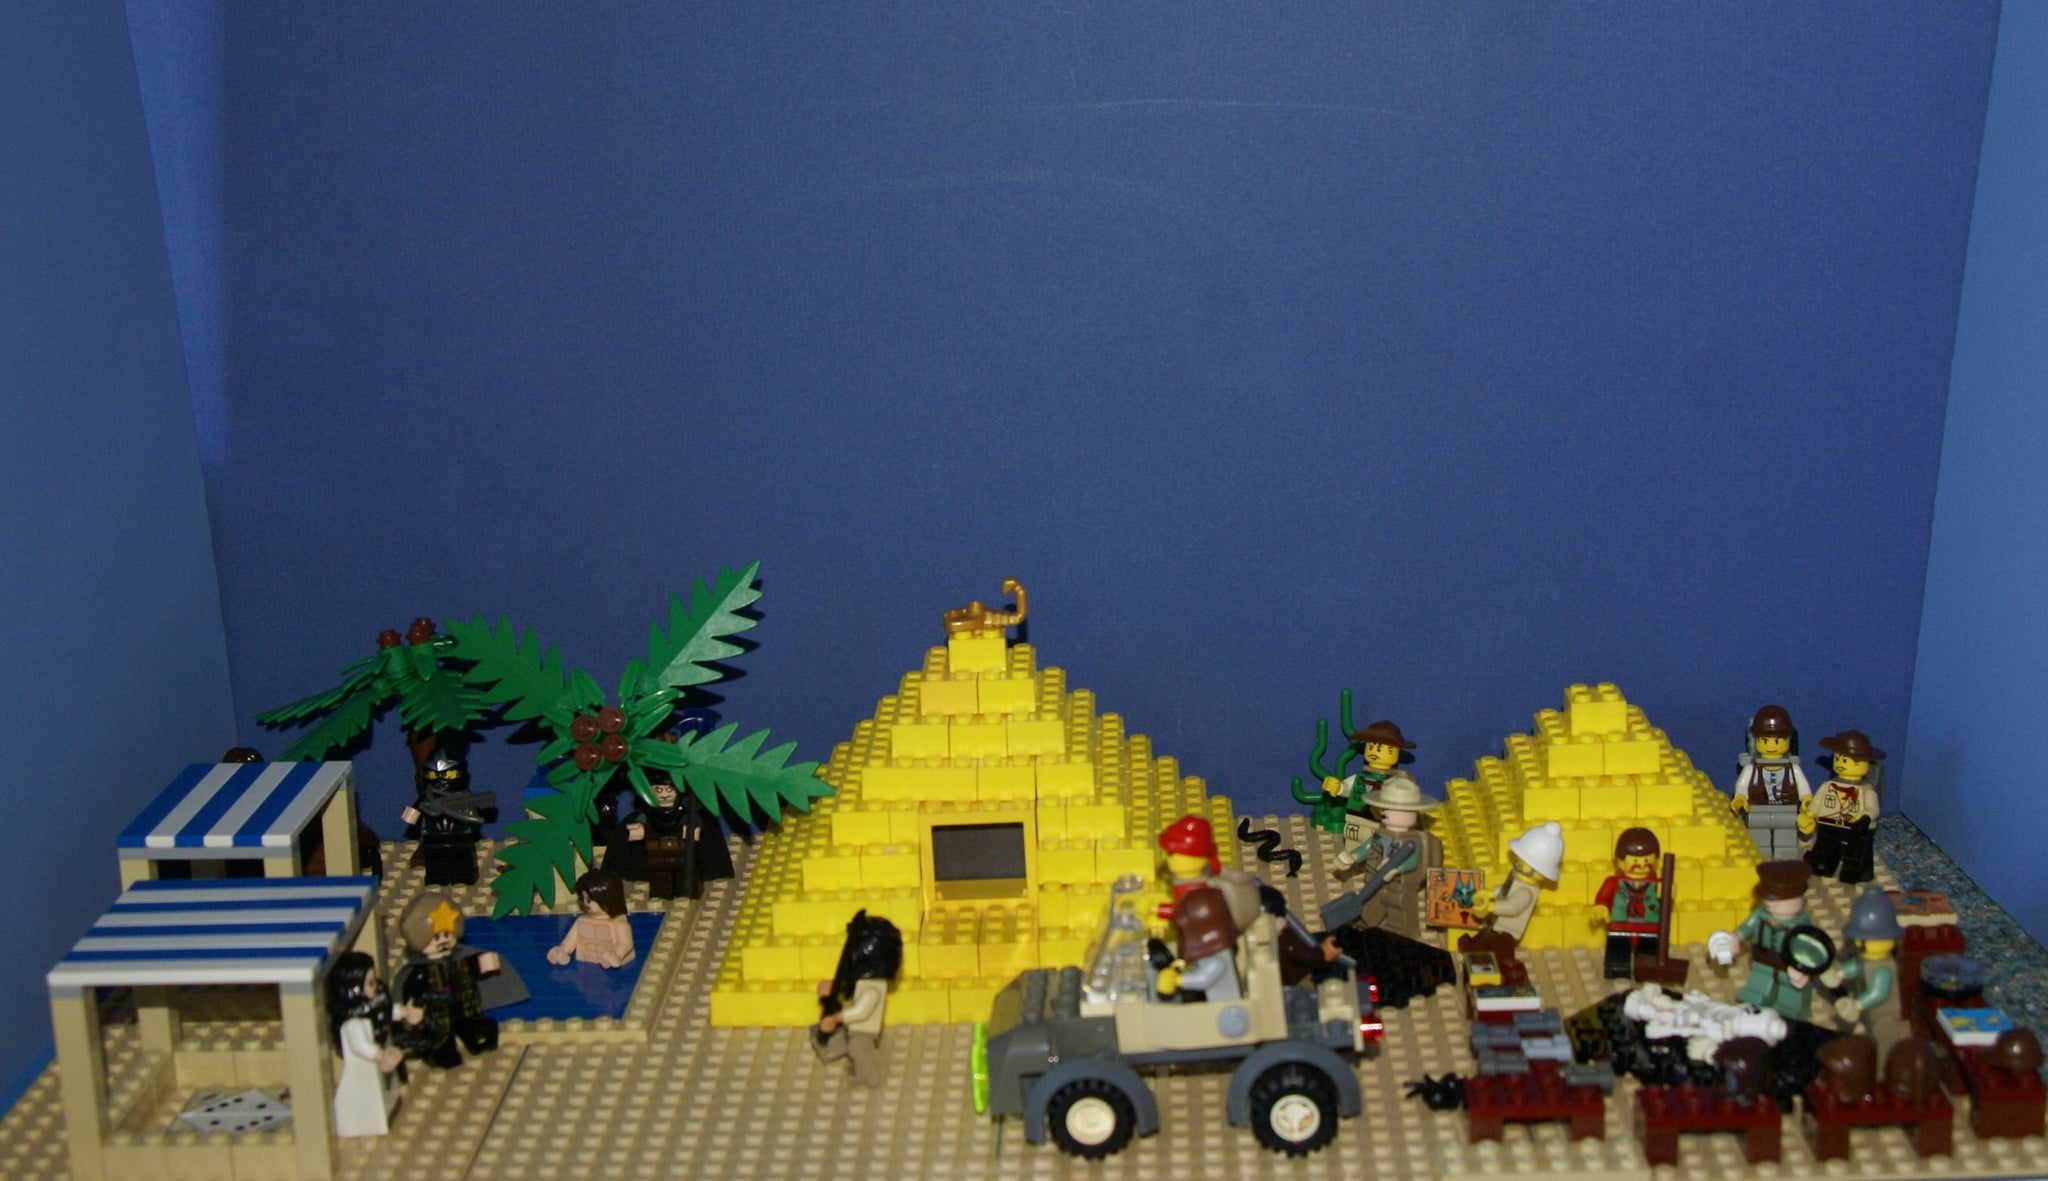 CUSTOM LEGO SET, PYRAMID ARCHEOLOGIC DIG WITH 33 NOW RETI – Rarest Finds